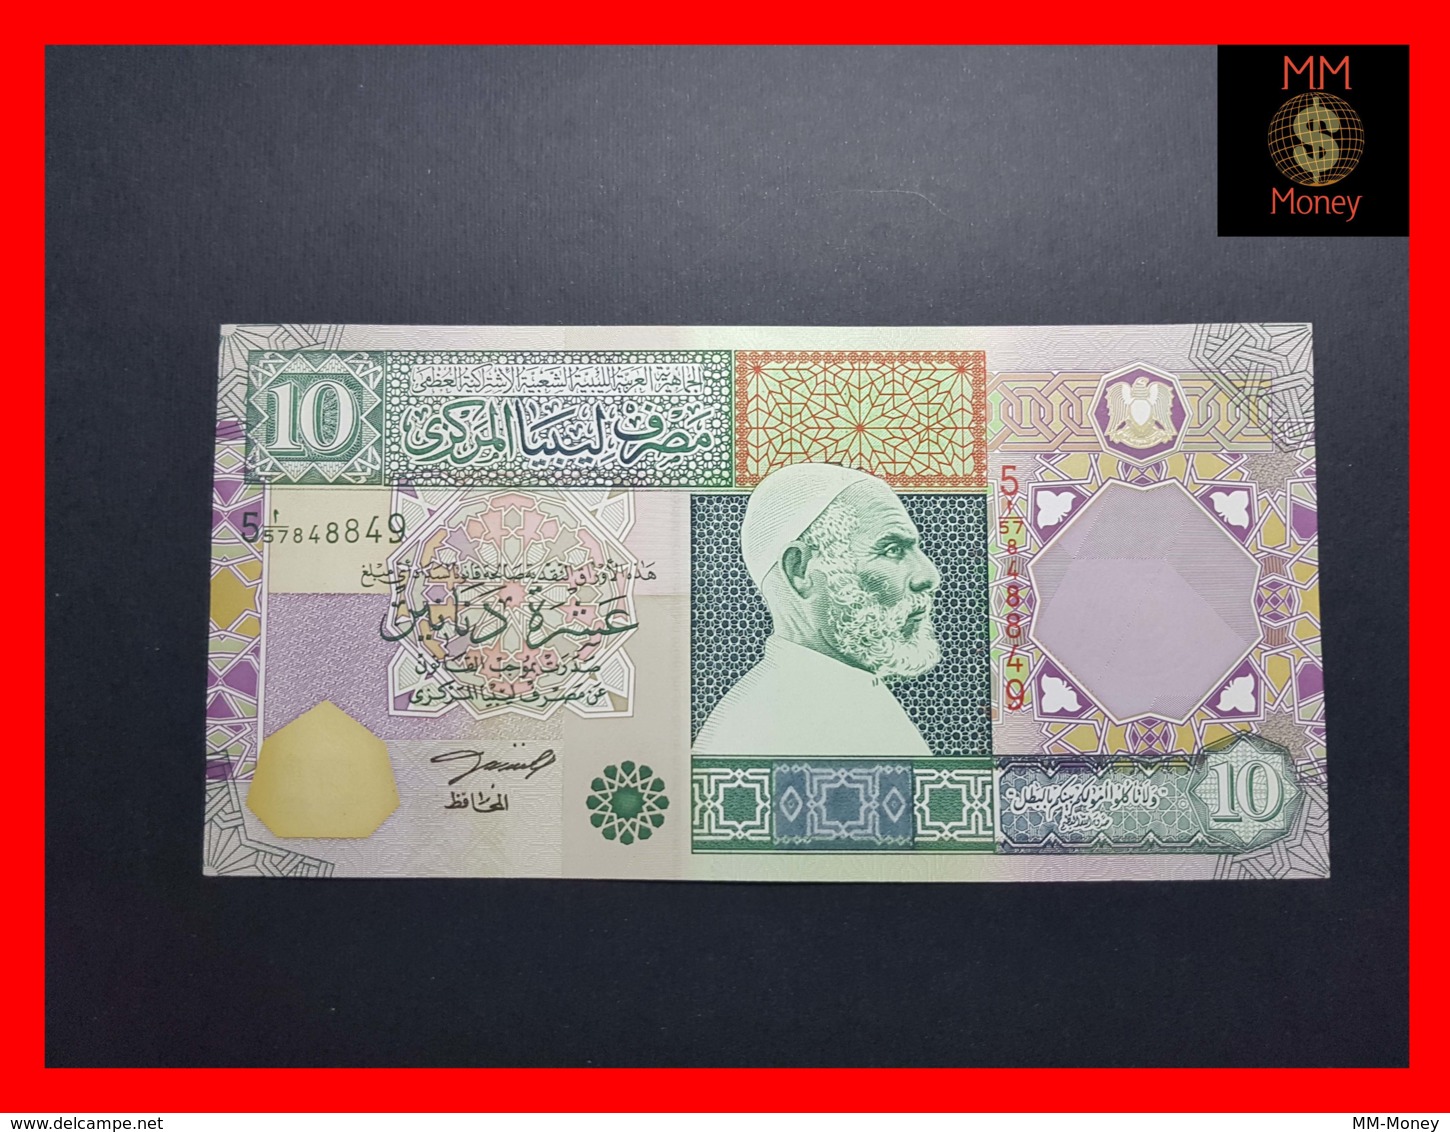 LIBYA 10 Dinars  2002  P. 66  UNC - Libya